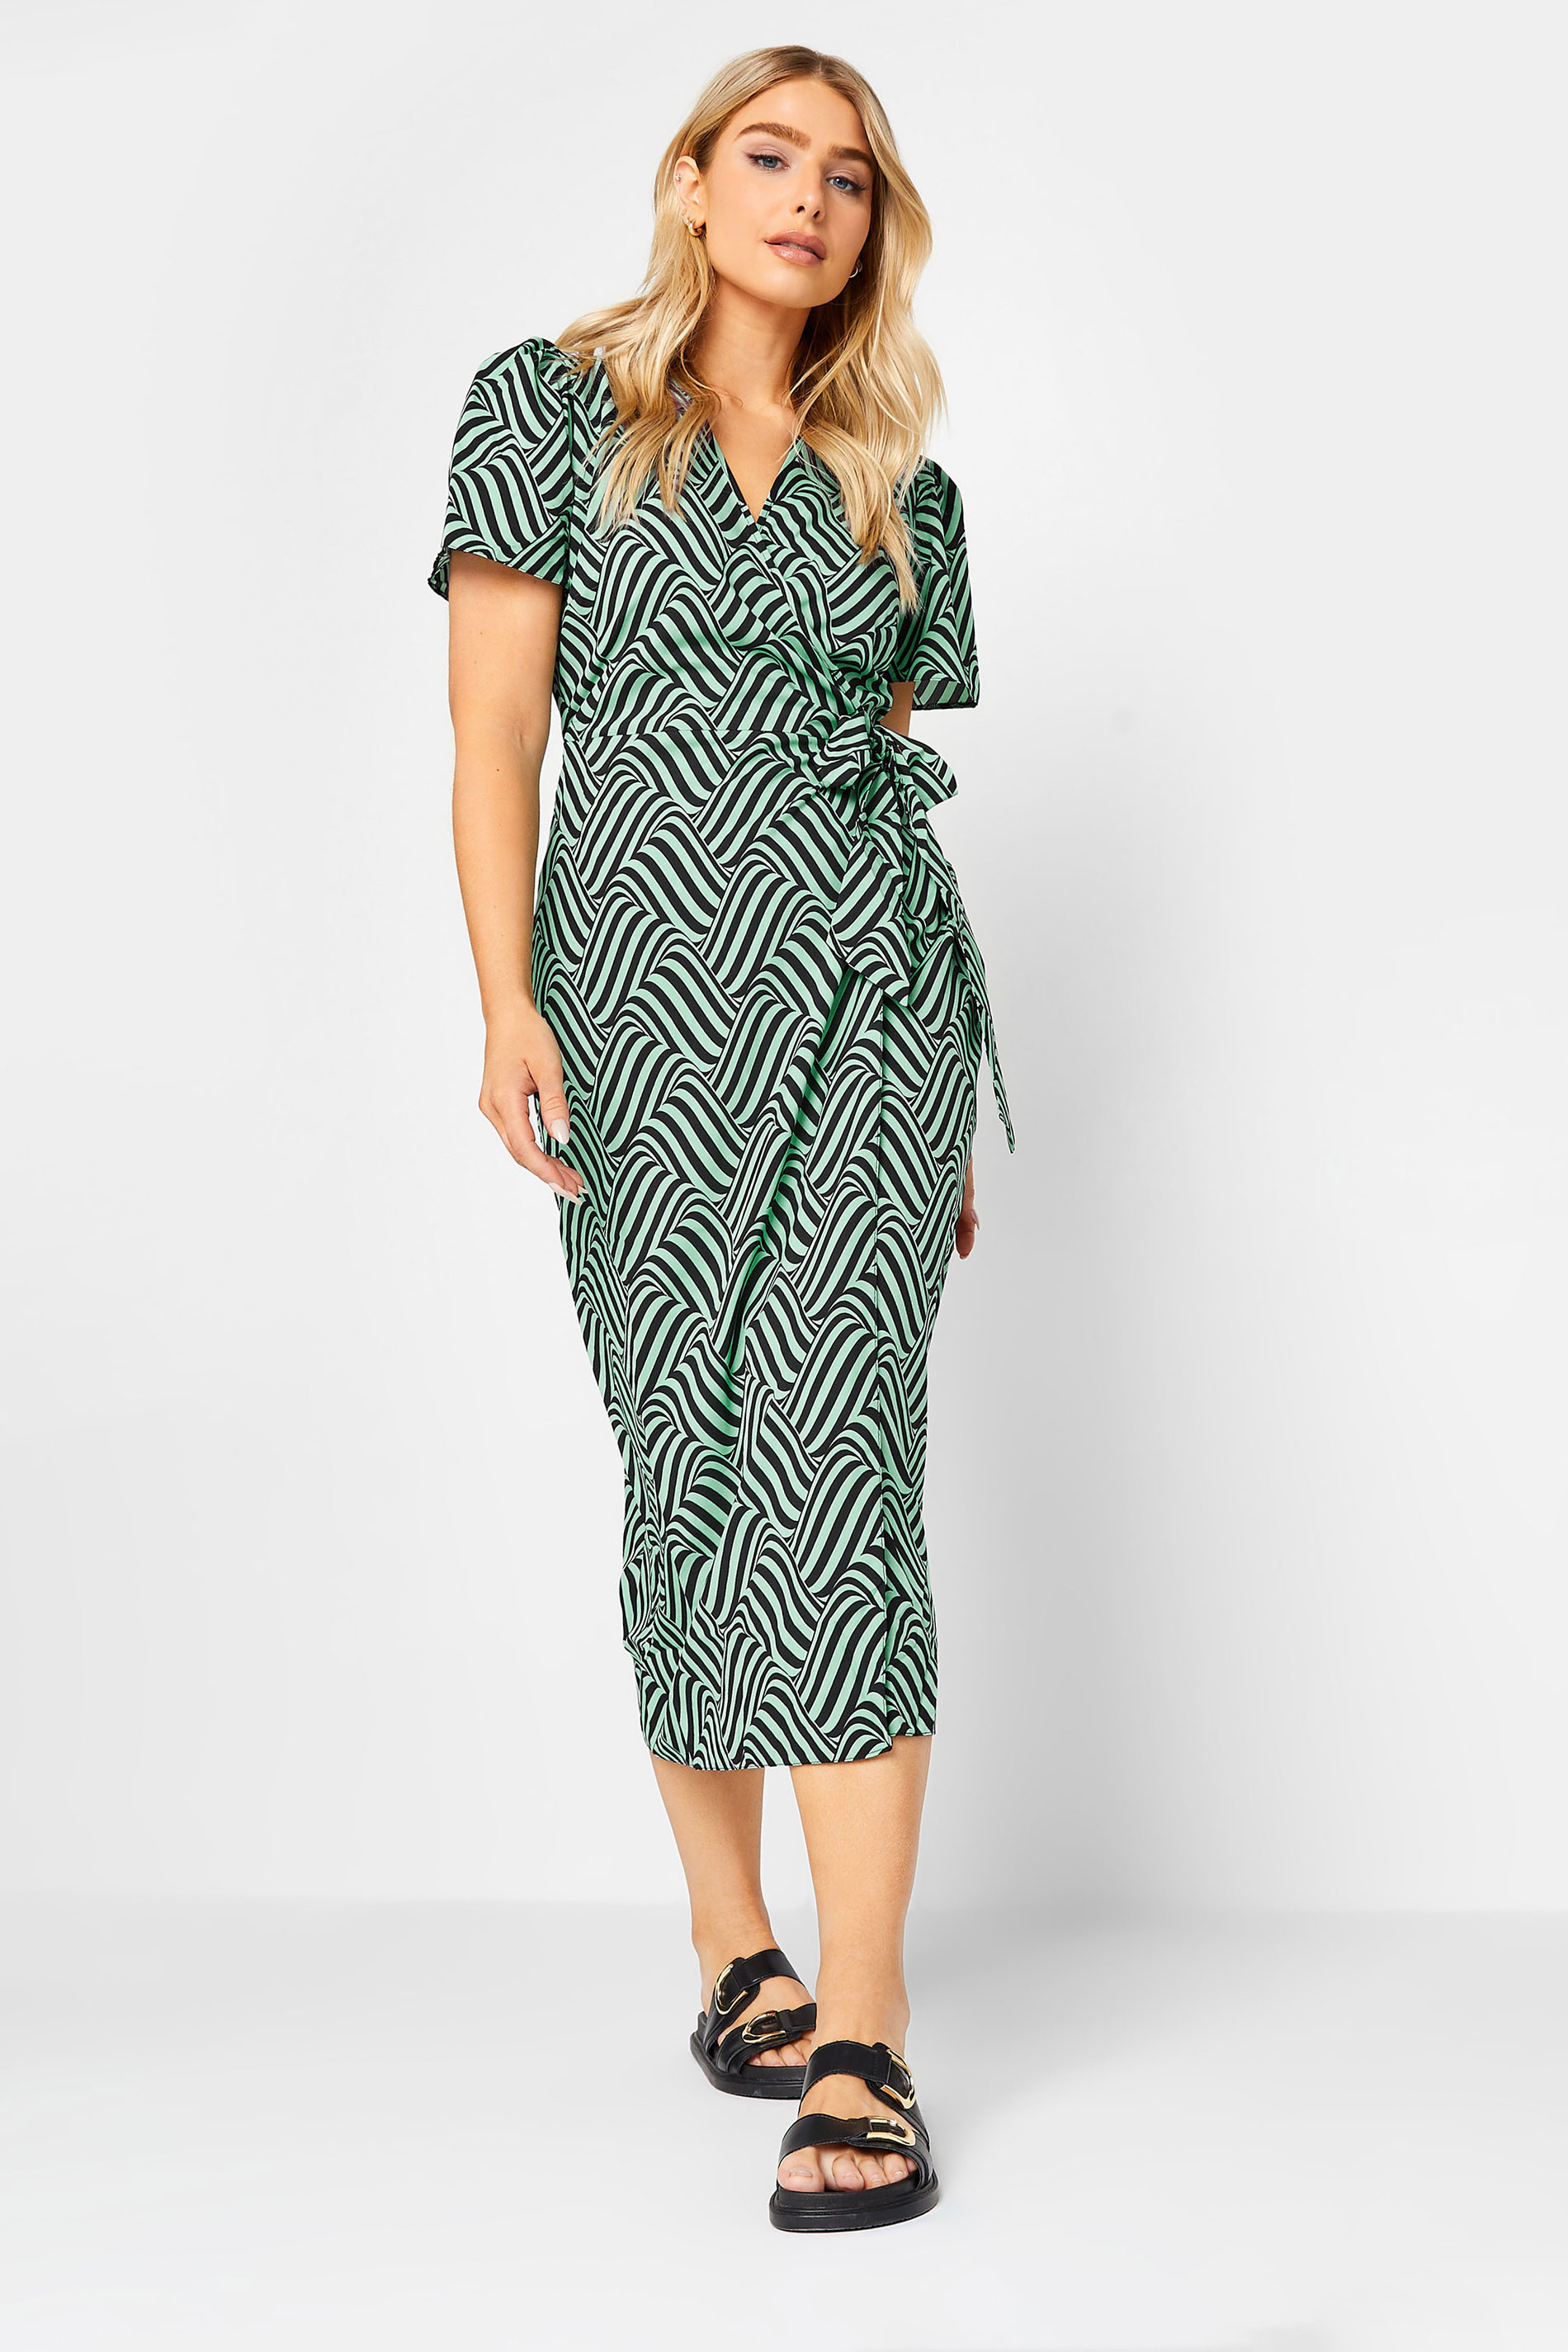 M&Co Green Abstract Stripe Wrap Dress | M&Co 2